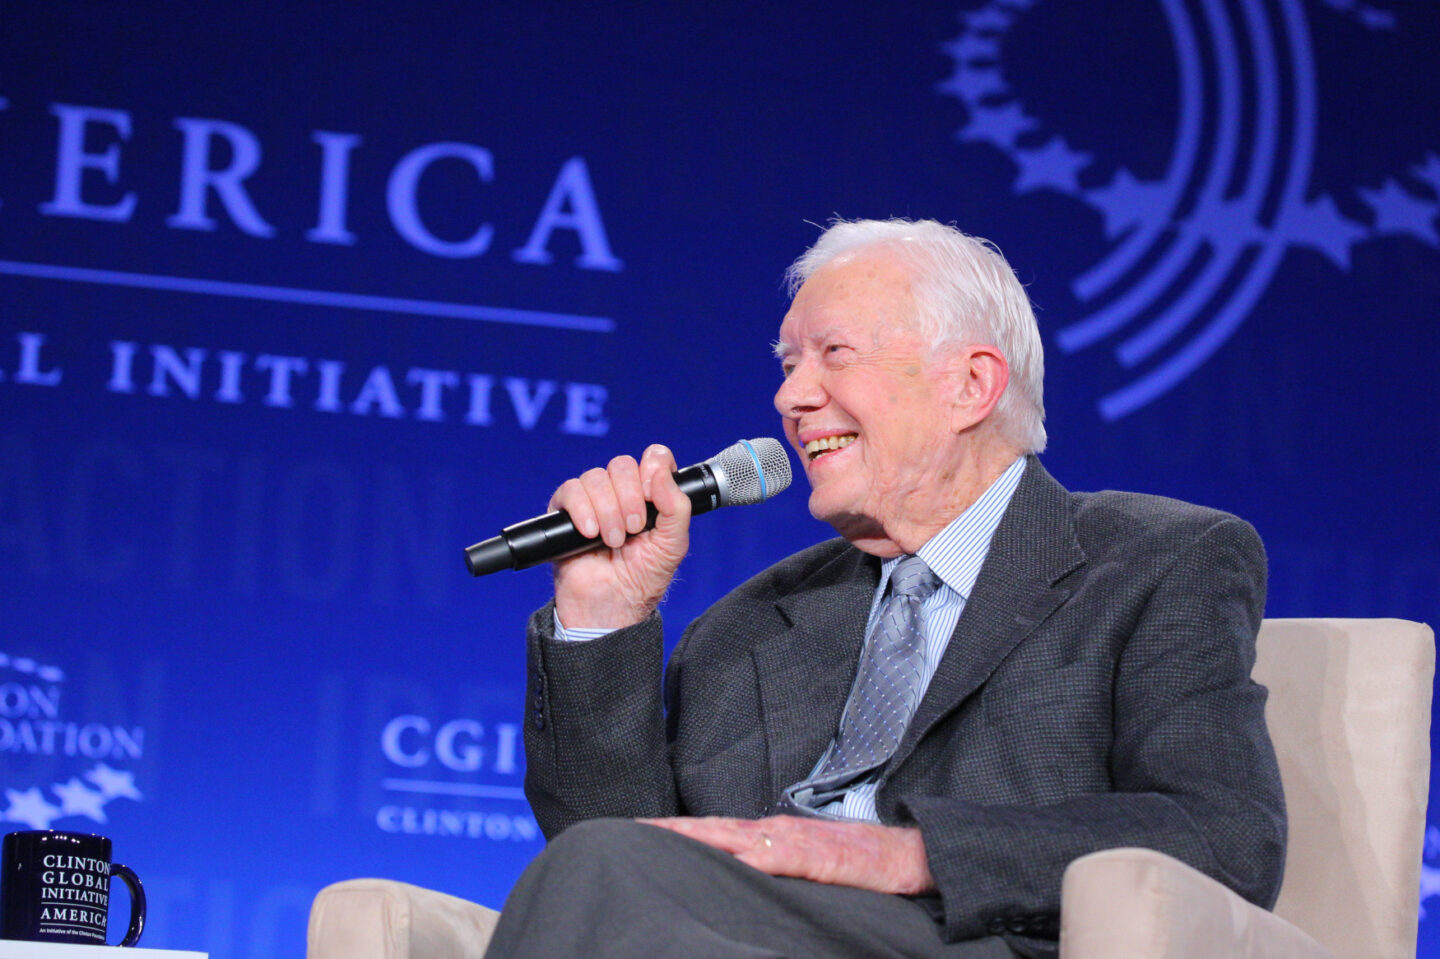 President Jimmy Carter speaks on stage